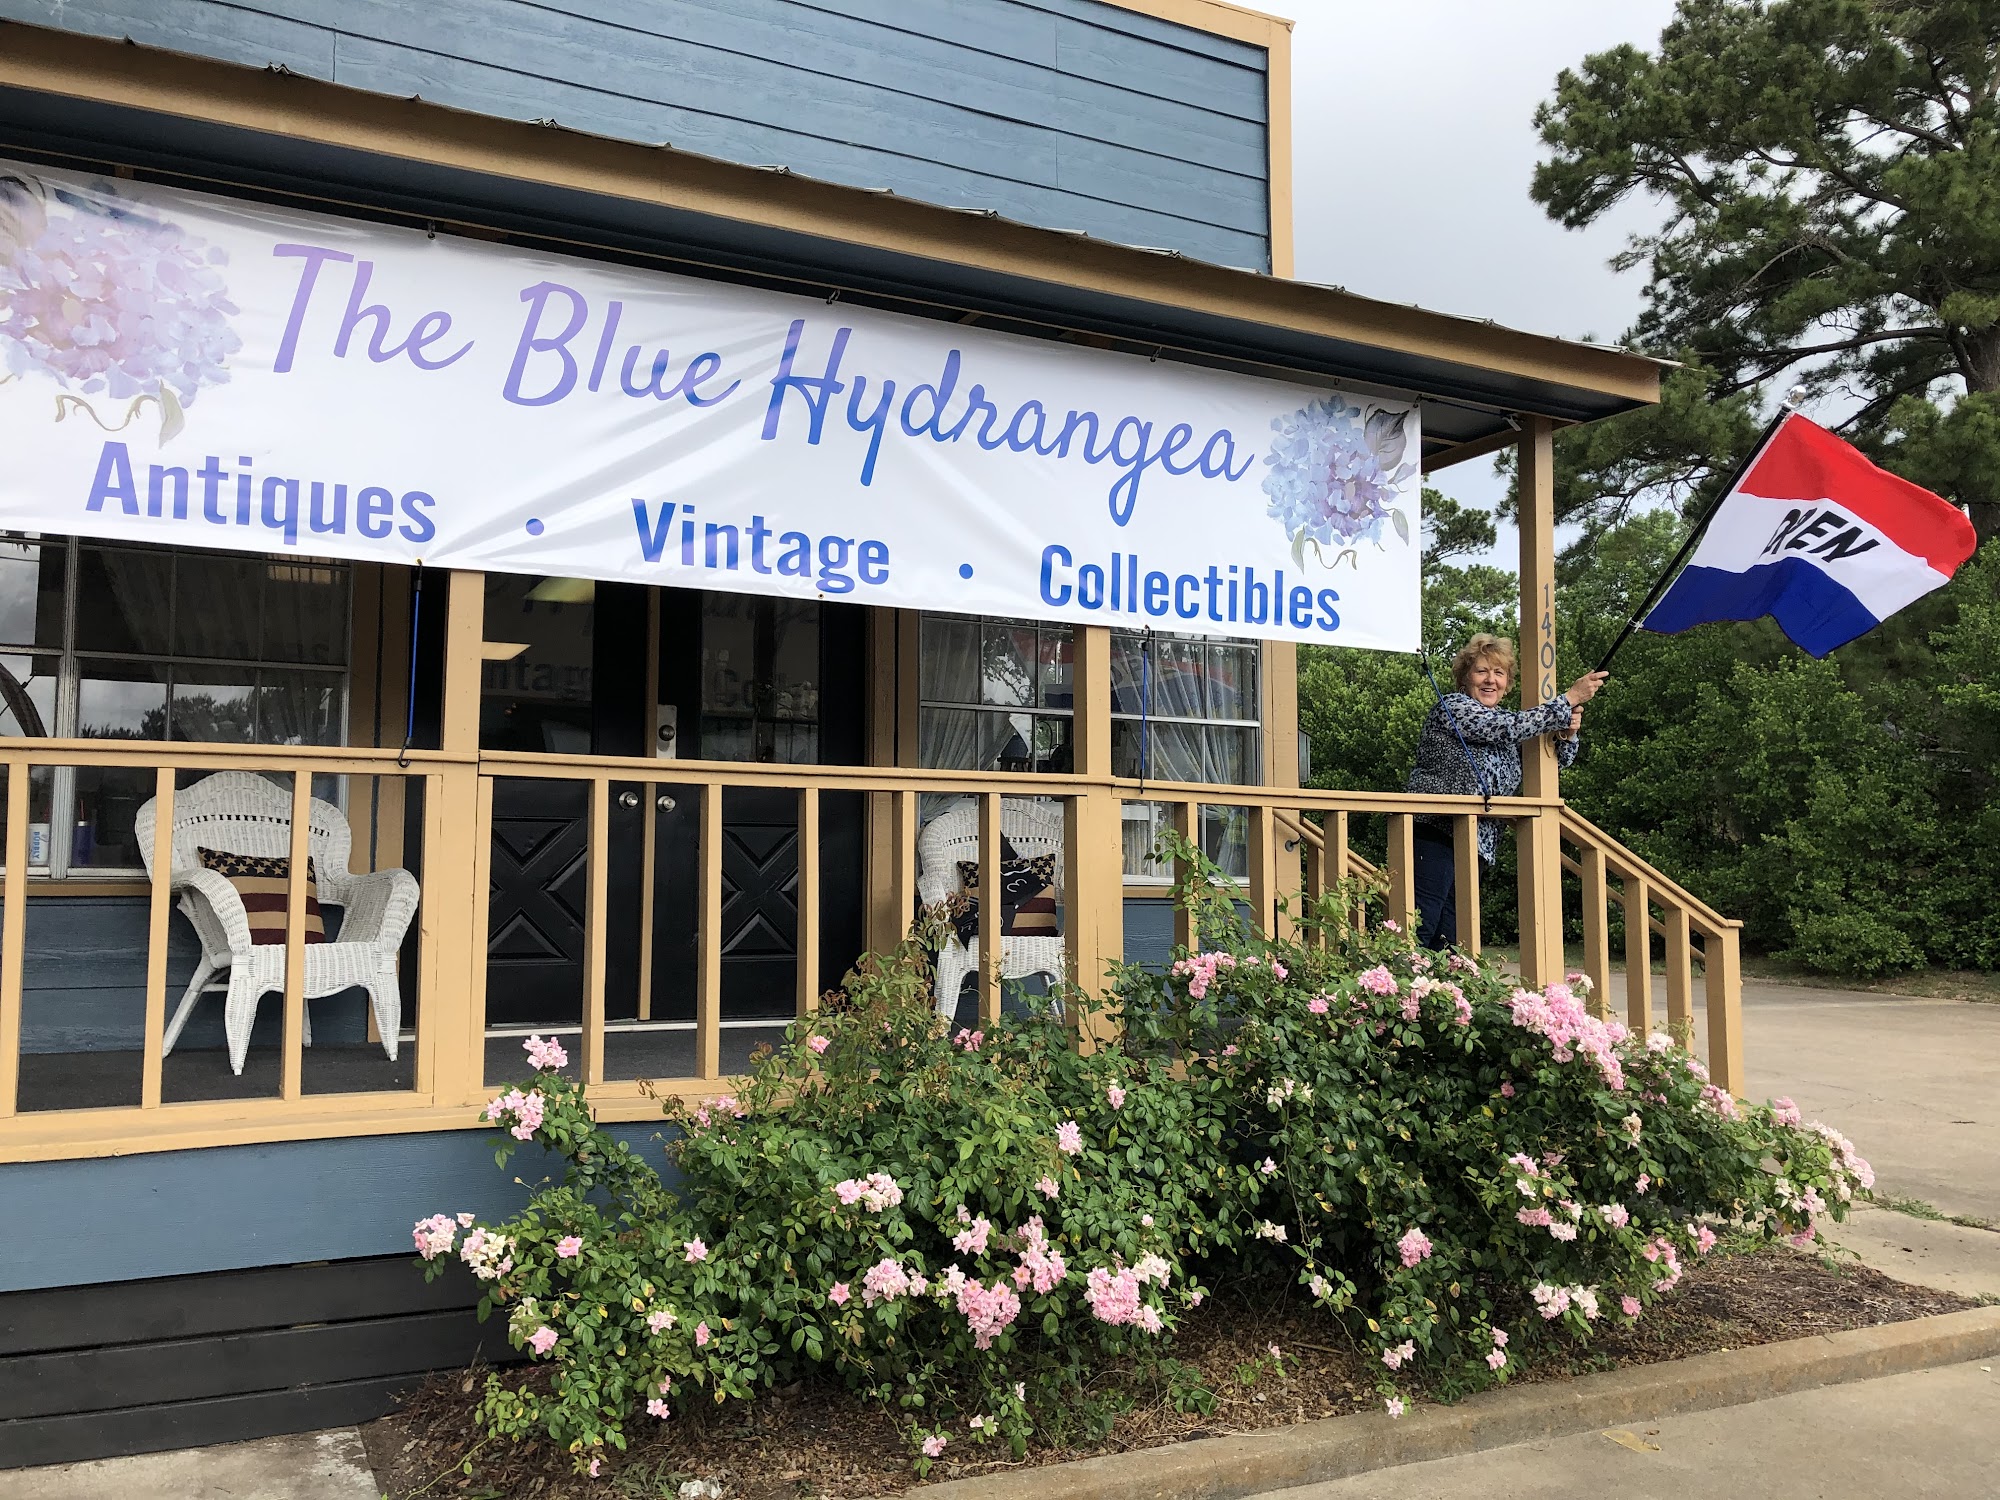 The Blue Hydrangea